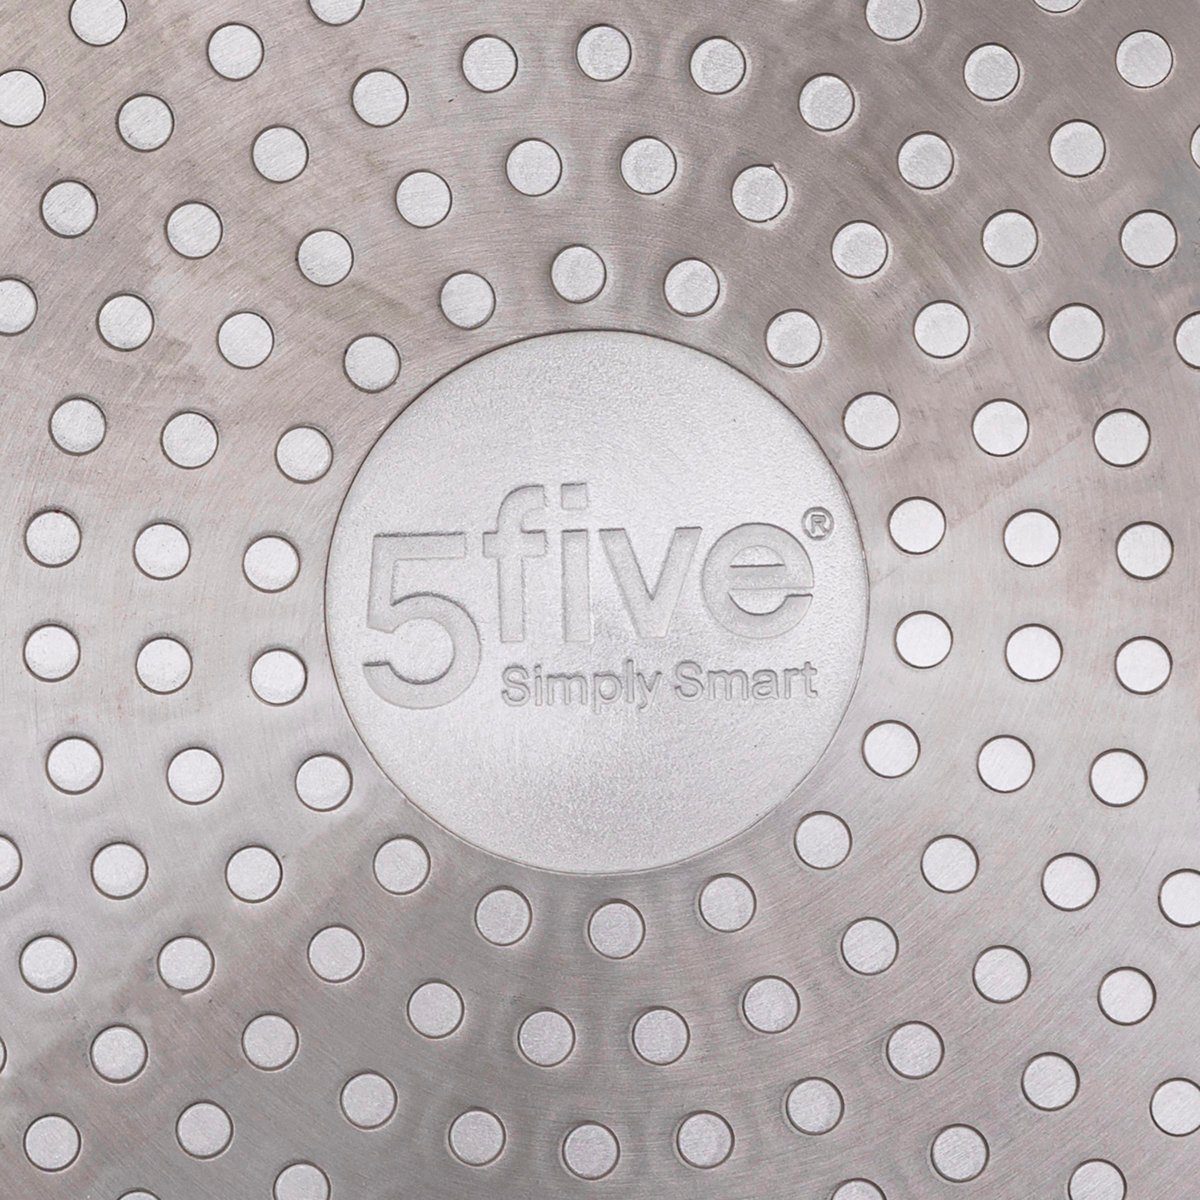 5five Simply Smart Bratpfanne, Aluminium (Einzaln)